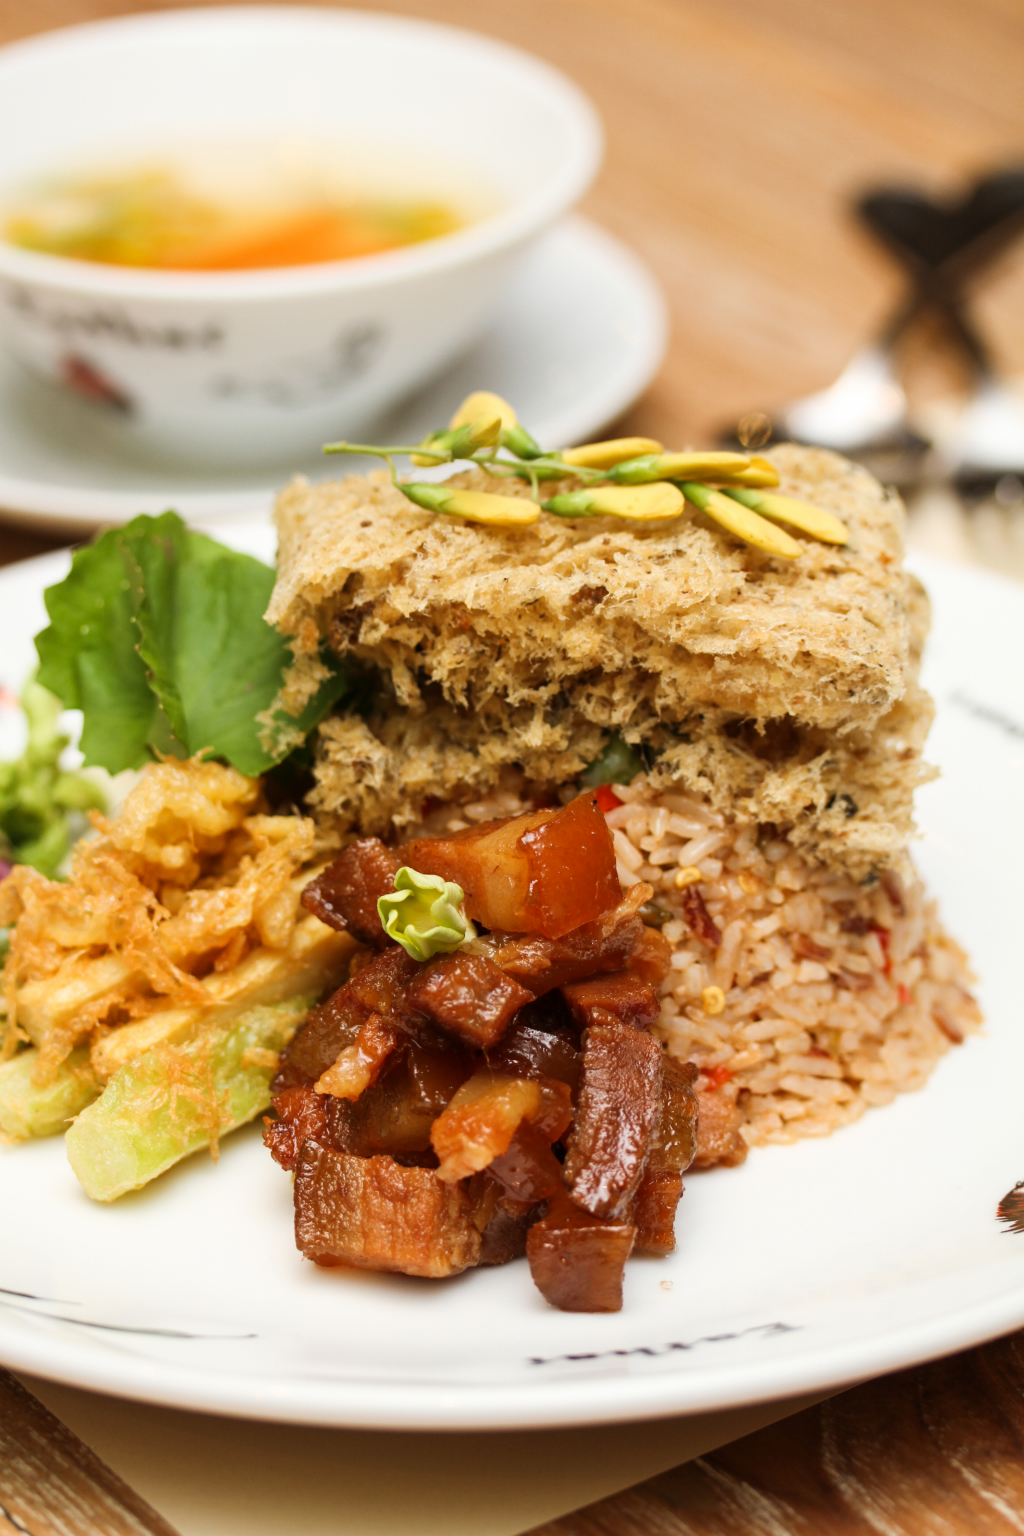 Eathai: Fried Rice with Shrimp Paste